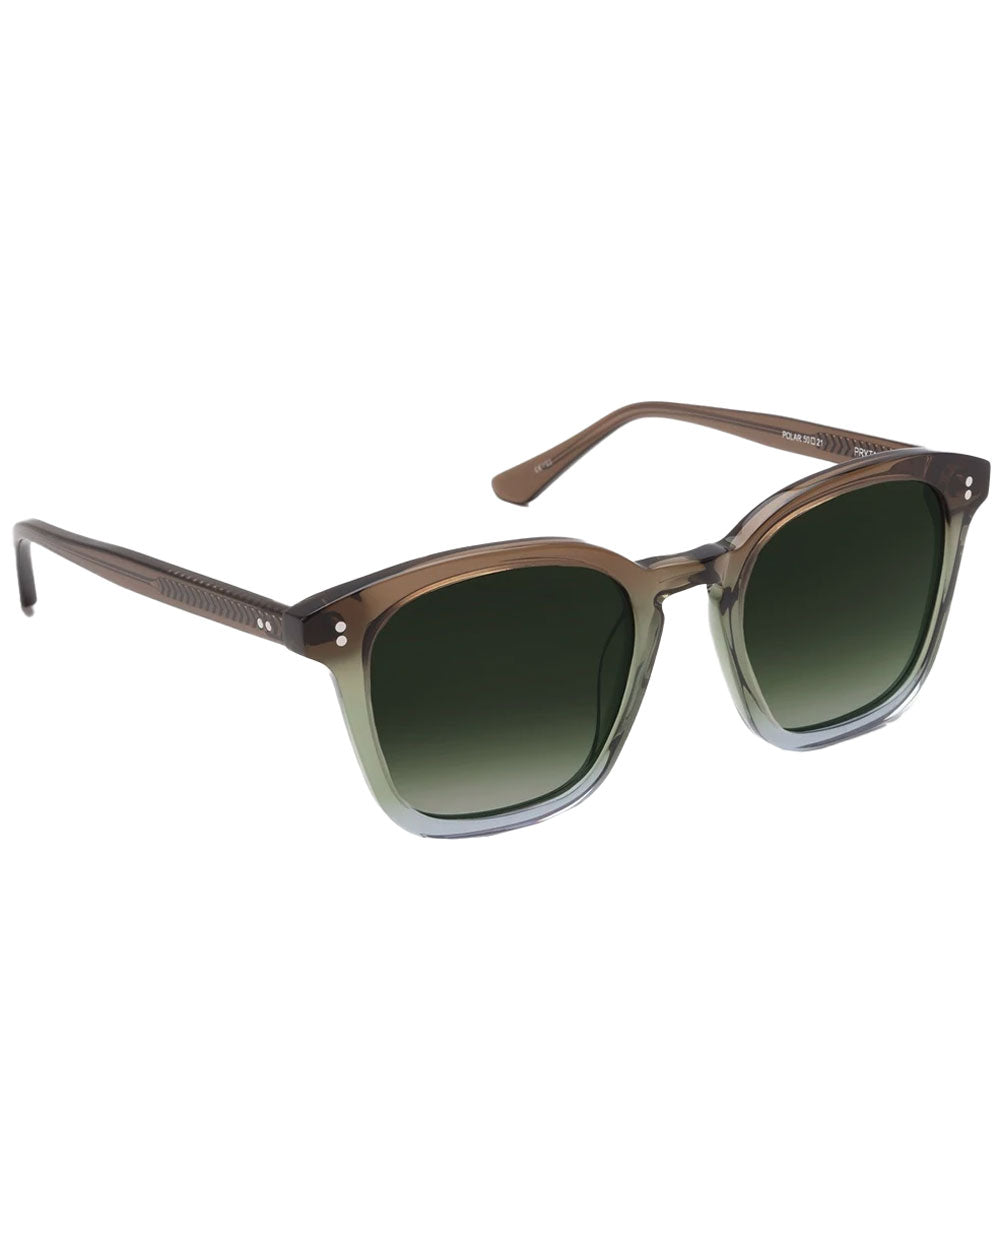 Prytania Sunglasses in Polarized Matcha and Pine